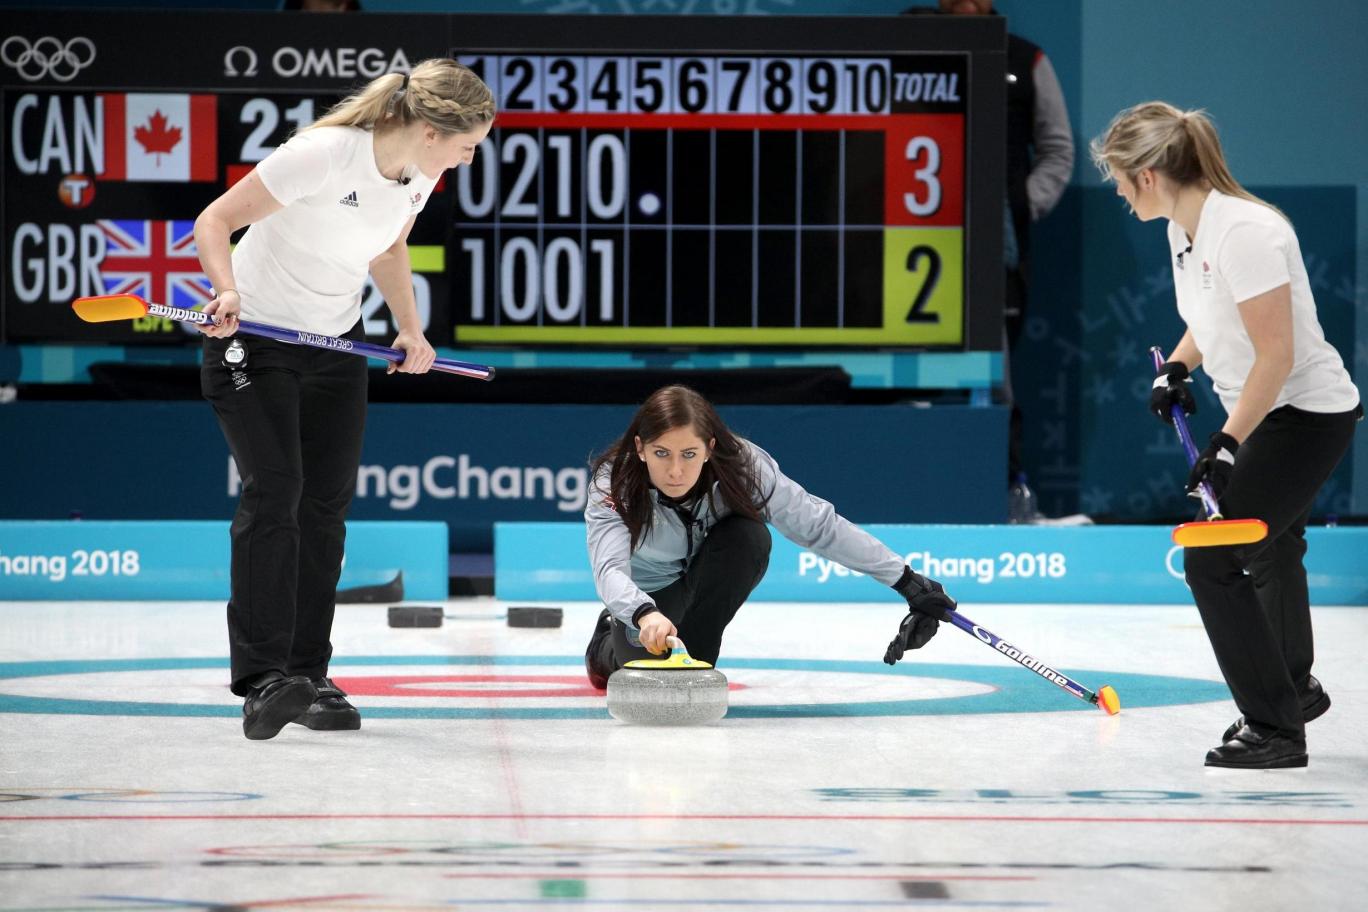 Great Britain Women's Curling Team Advances to Semi-Finals